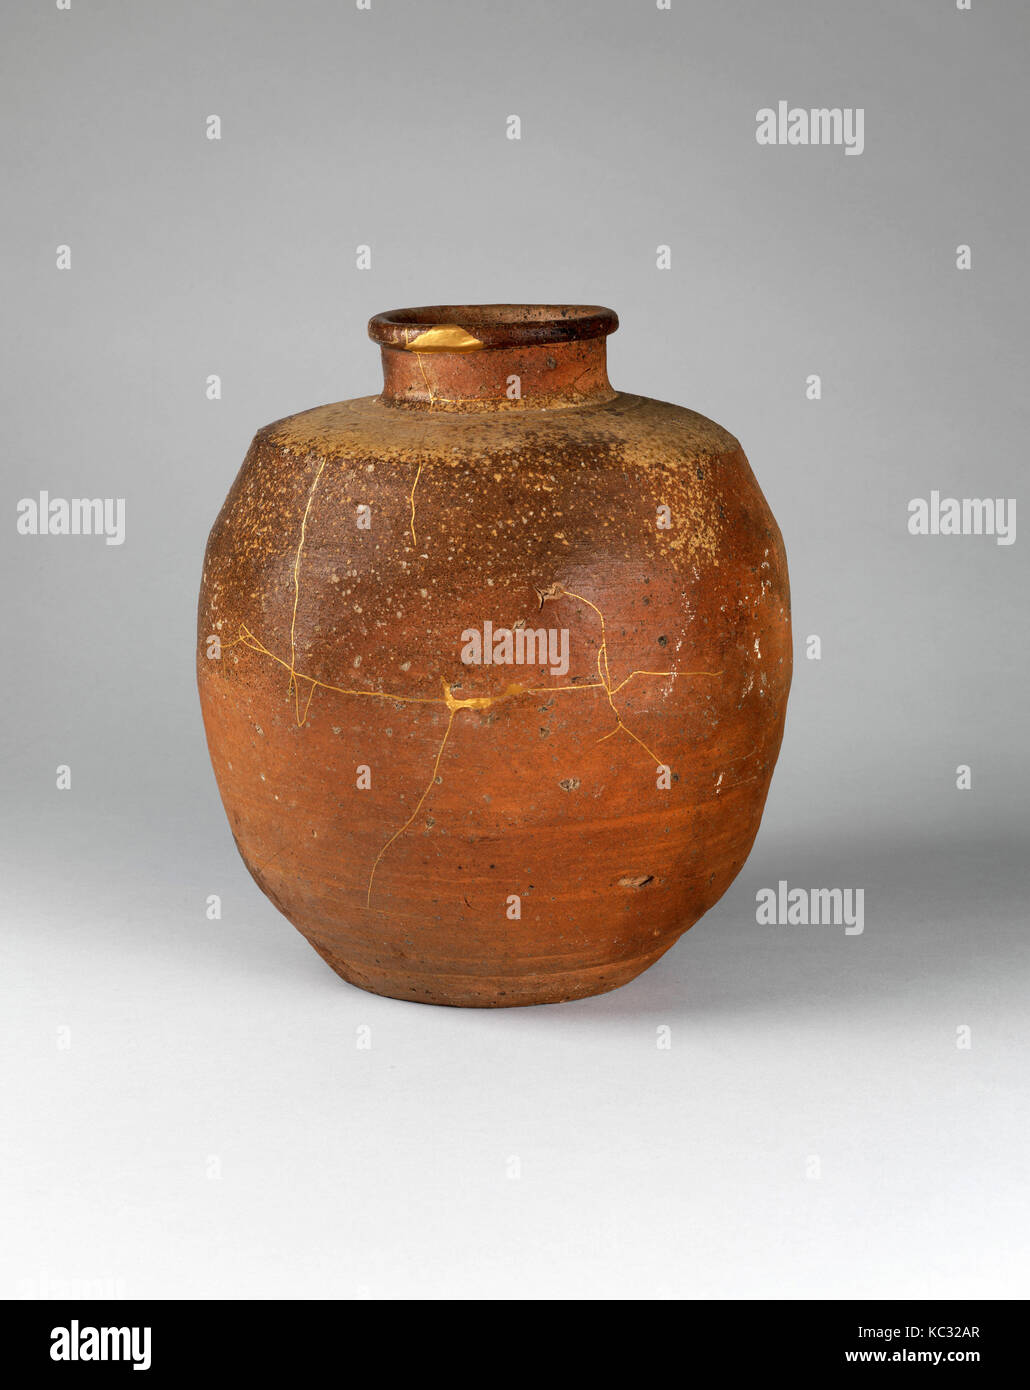 信楽自然釉壺, Shigaraki Jar (Tsubo), de la période Edo (1615-1868), 17e siècle, au Japon, en grès avec Frêne naturel glaçage et laque d'or Banque D'Images